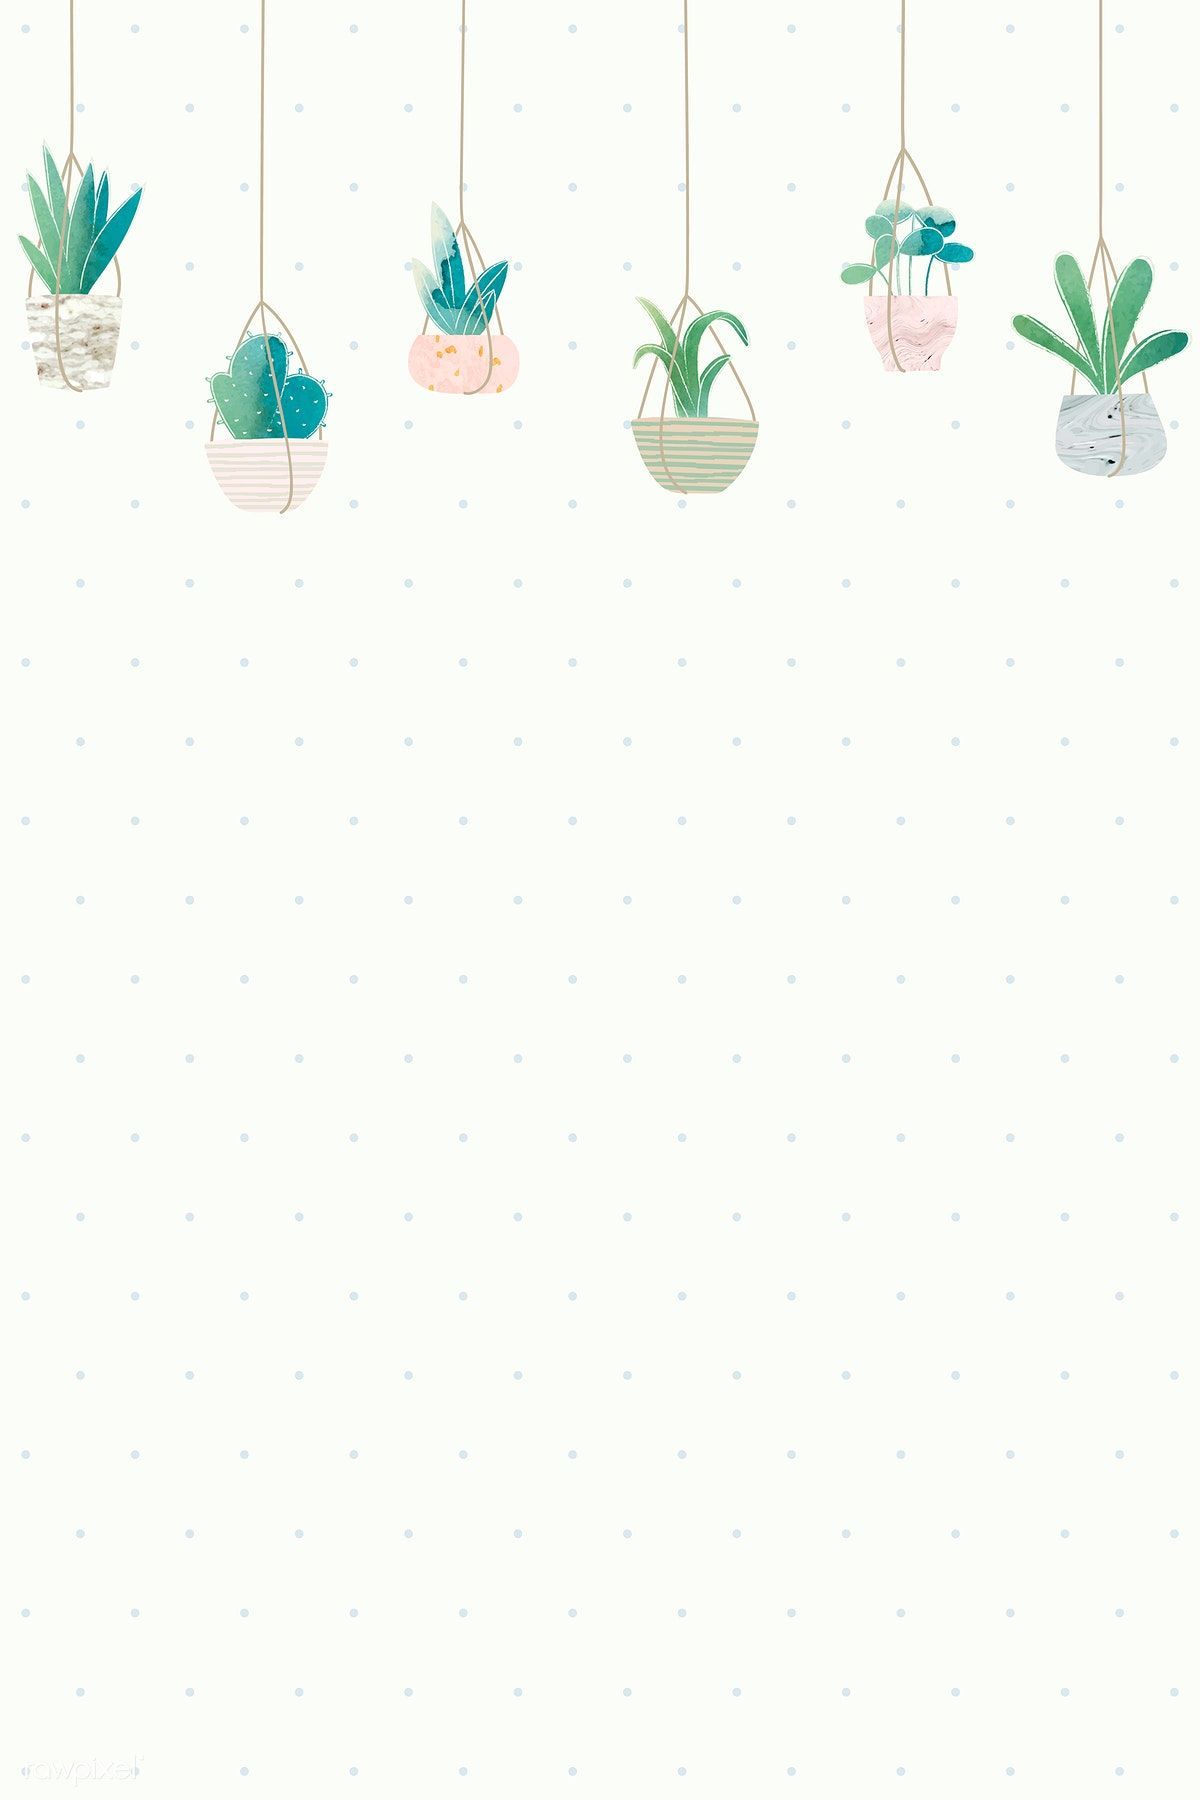 Blank cactus frame design vector. premium image / marinemynt. Cactus vector, Cactus illustration, Aesthetic iphone wallpaper